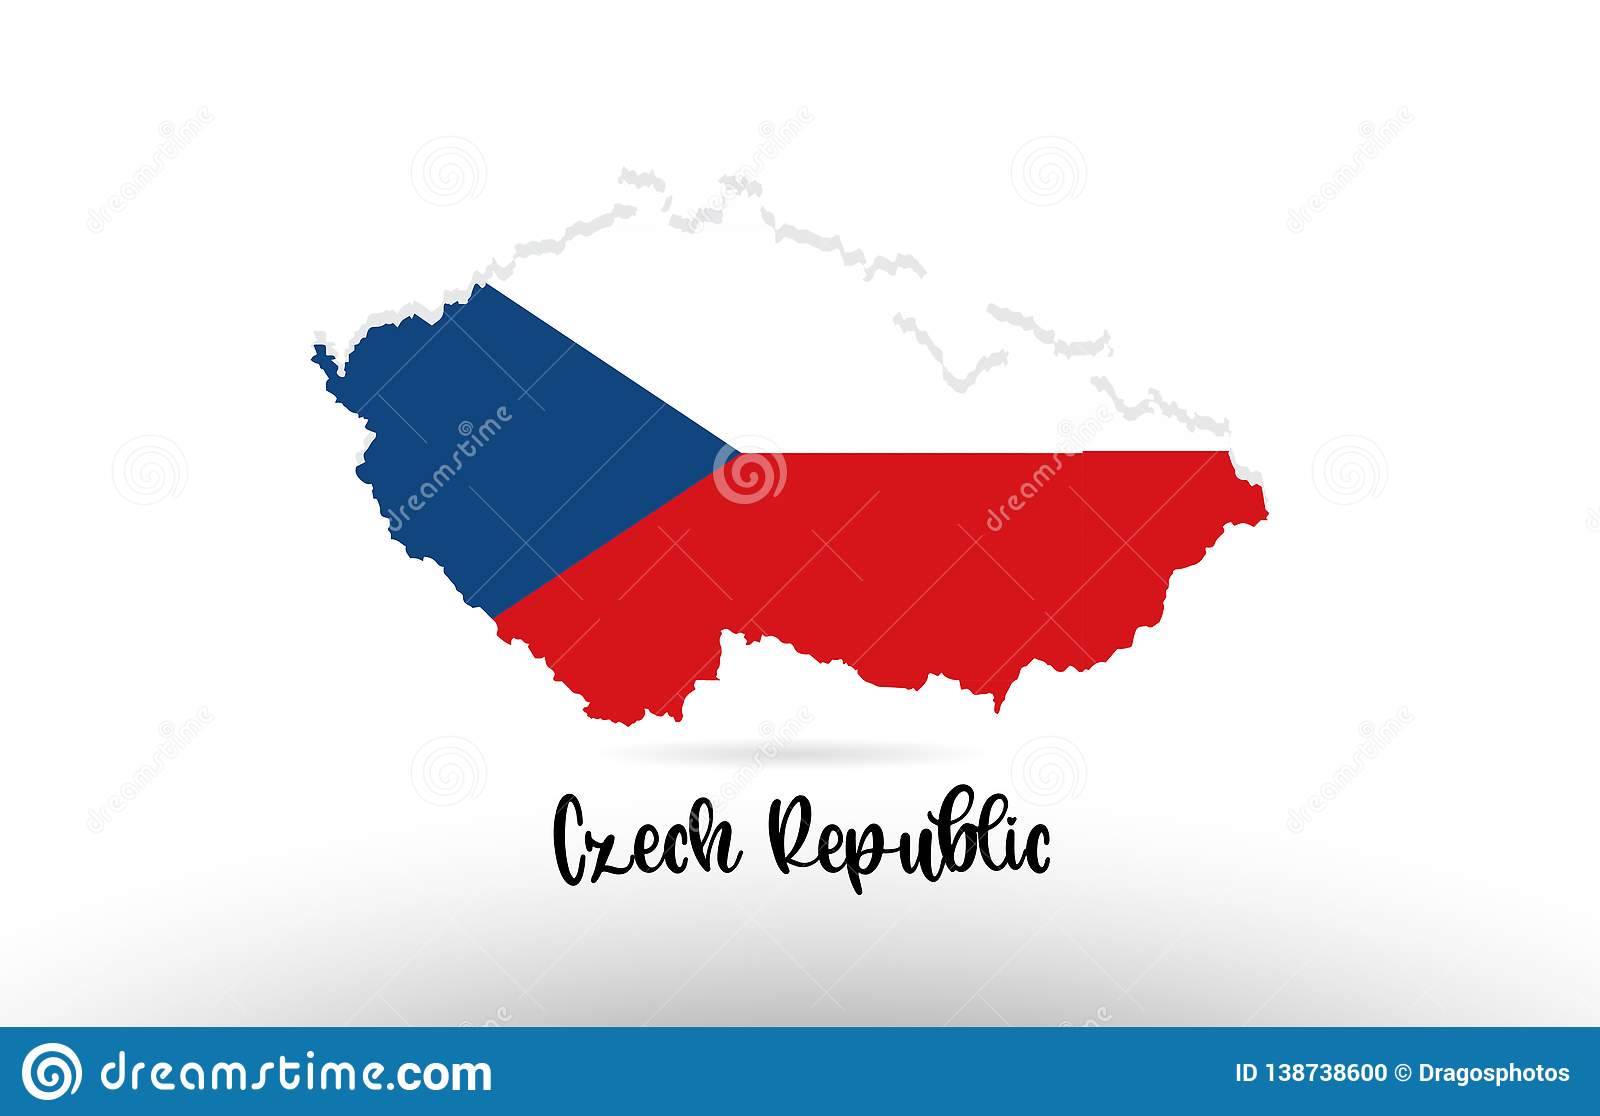 Creative czech republic flag coloring page